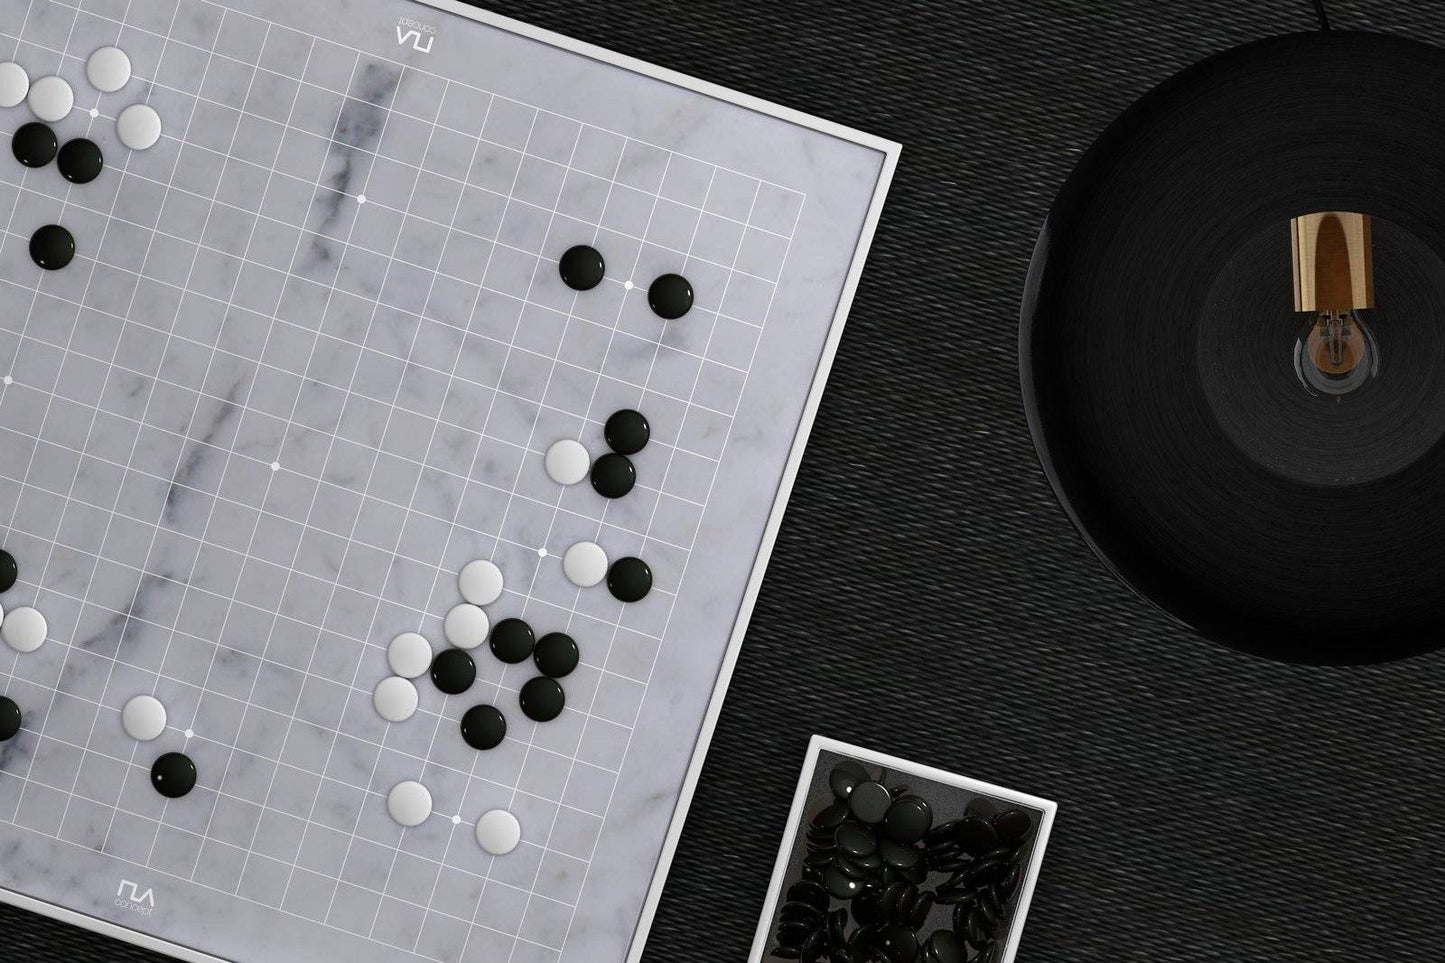 Gray Marble 19x19 Go Set - Handmade geometric modern go set design gift by PLA Concept